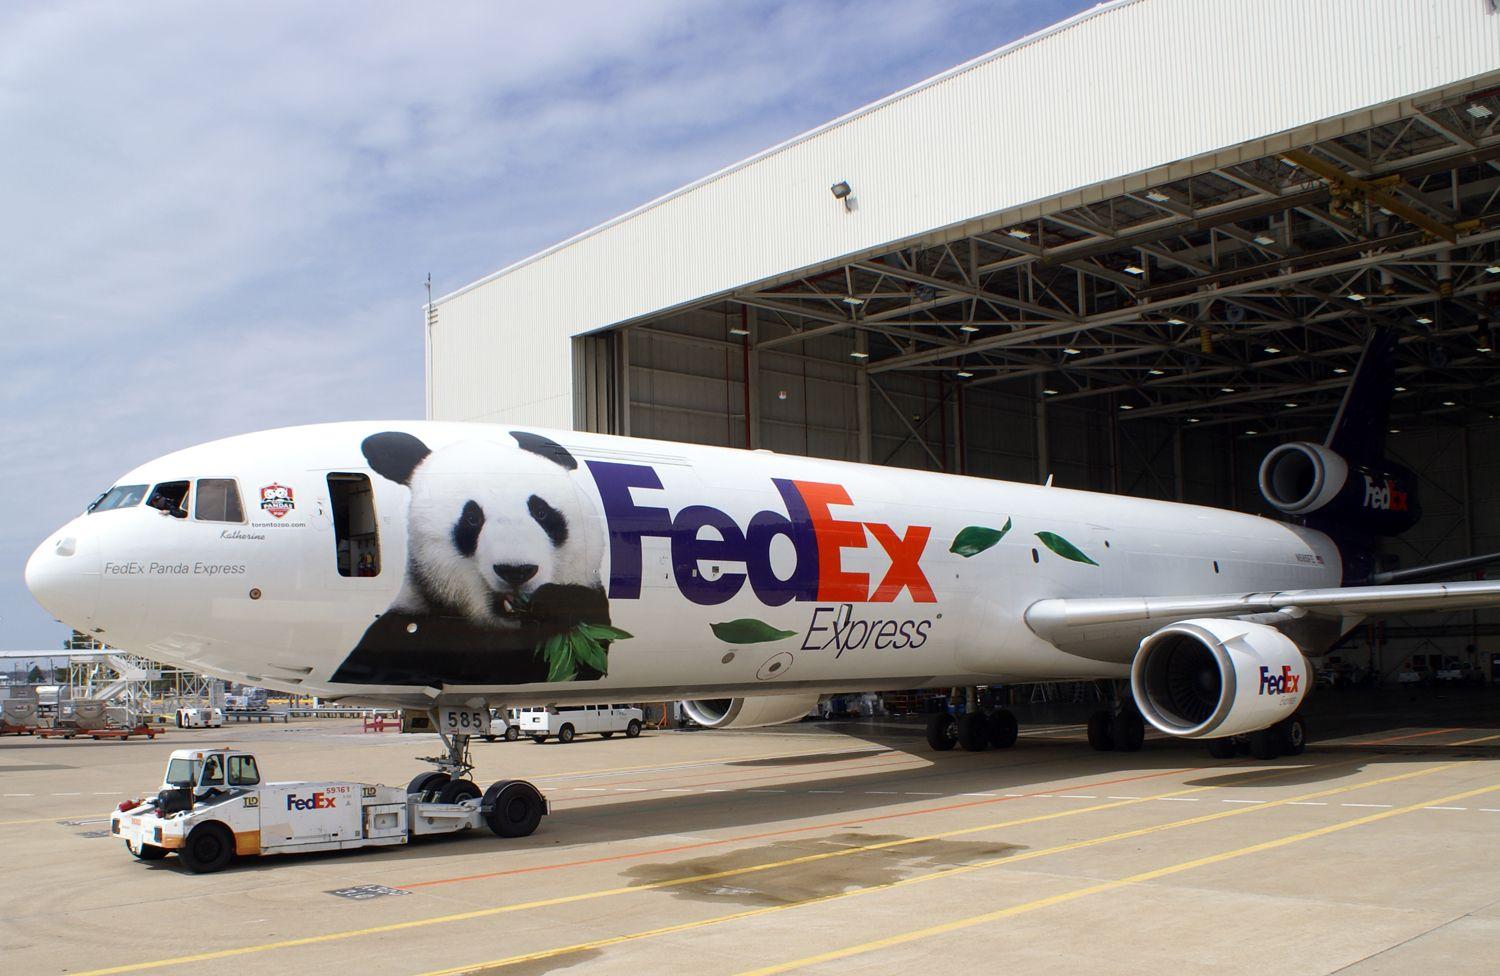 FedEx Plane Logo - The FedEx Panda Express - China to Canada